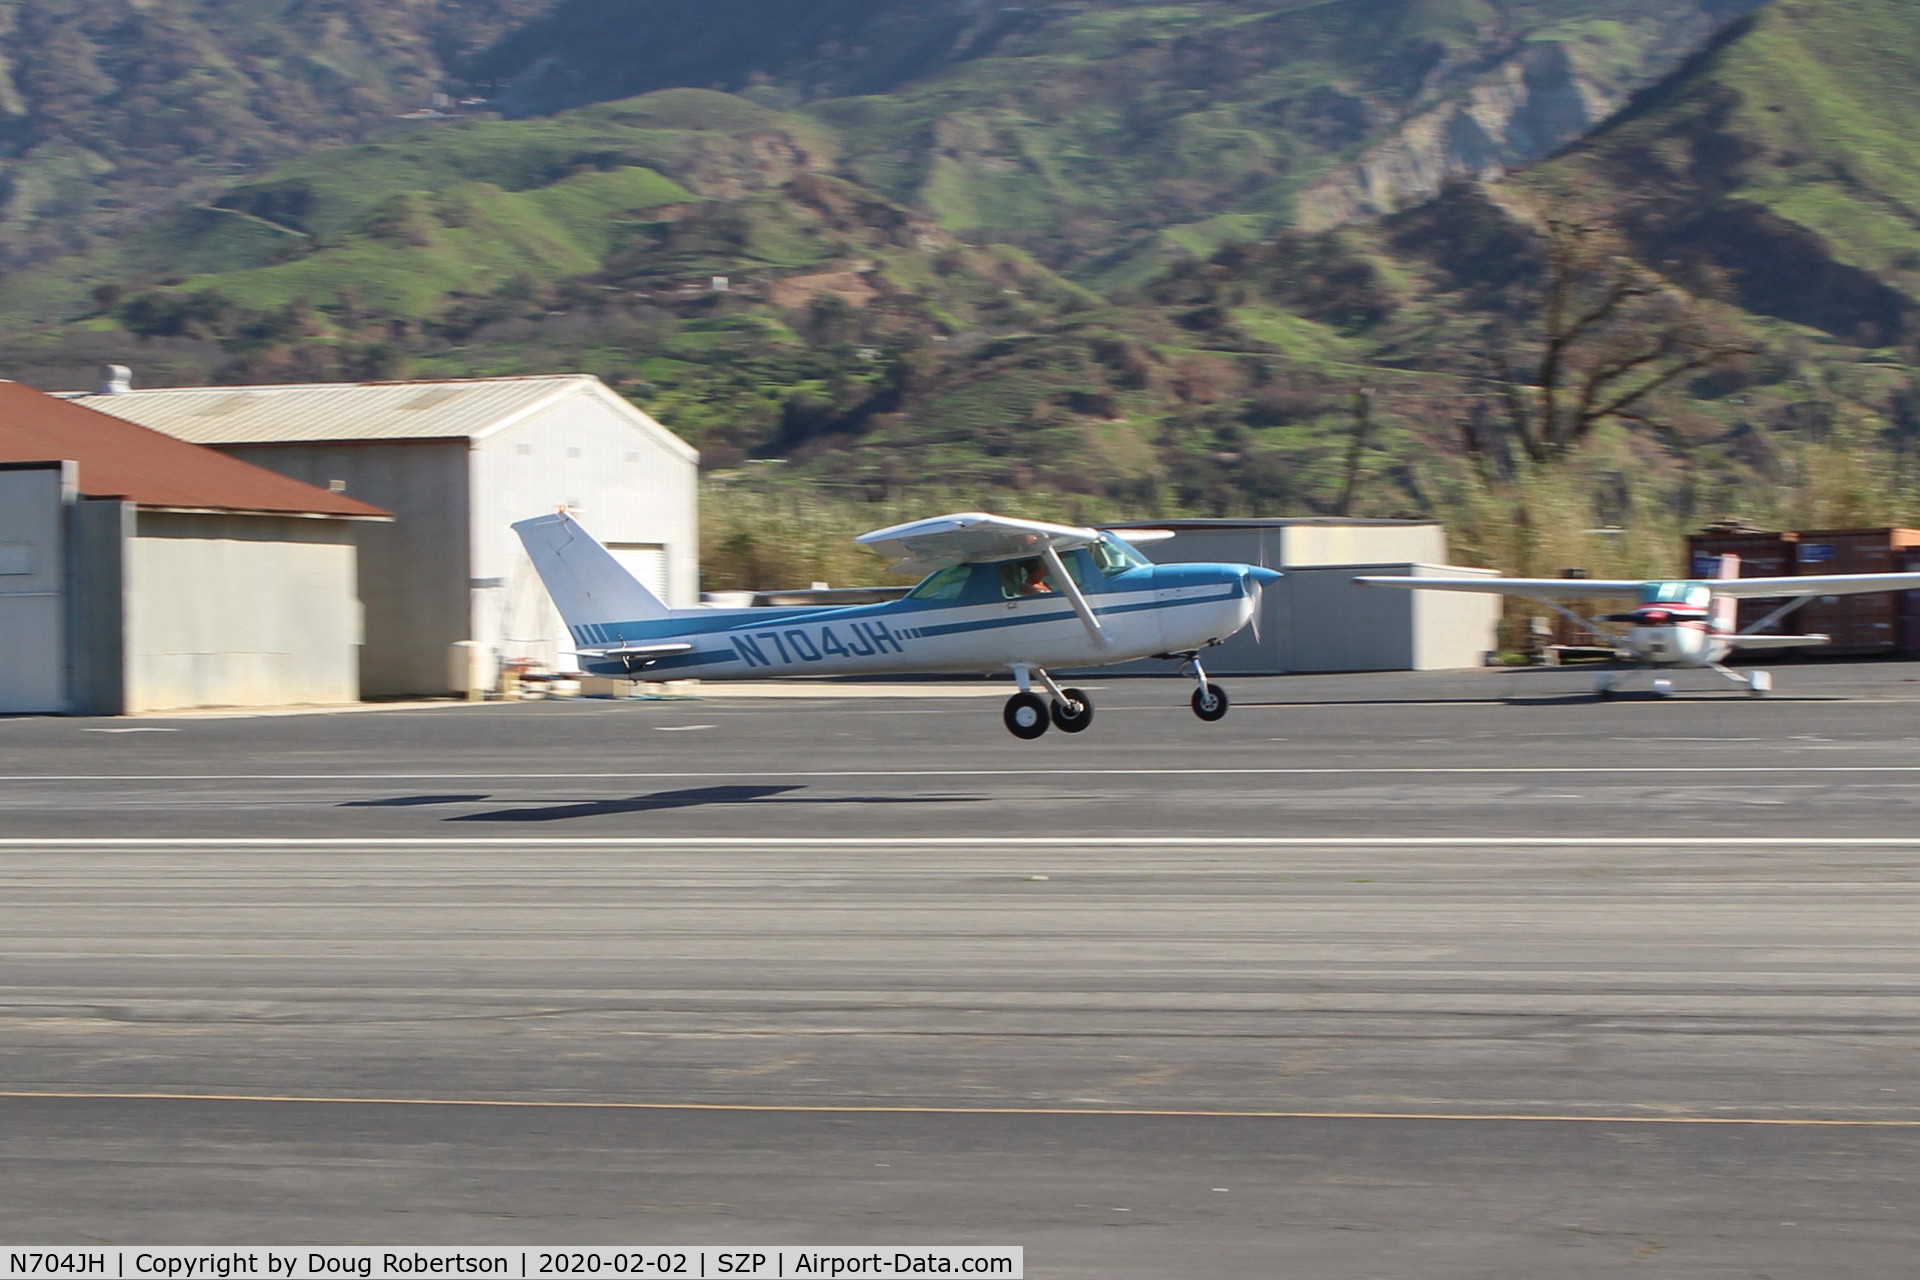 N704JH, 1976 Cessna 150M C/N 15078644, 1976 Cessna 150M, Continental O-200 100 Hp, landing Rwy 22